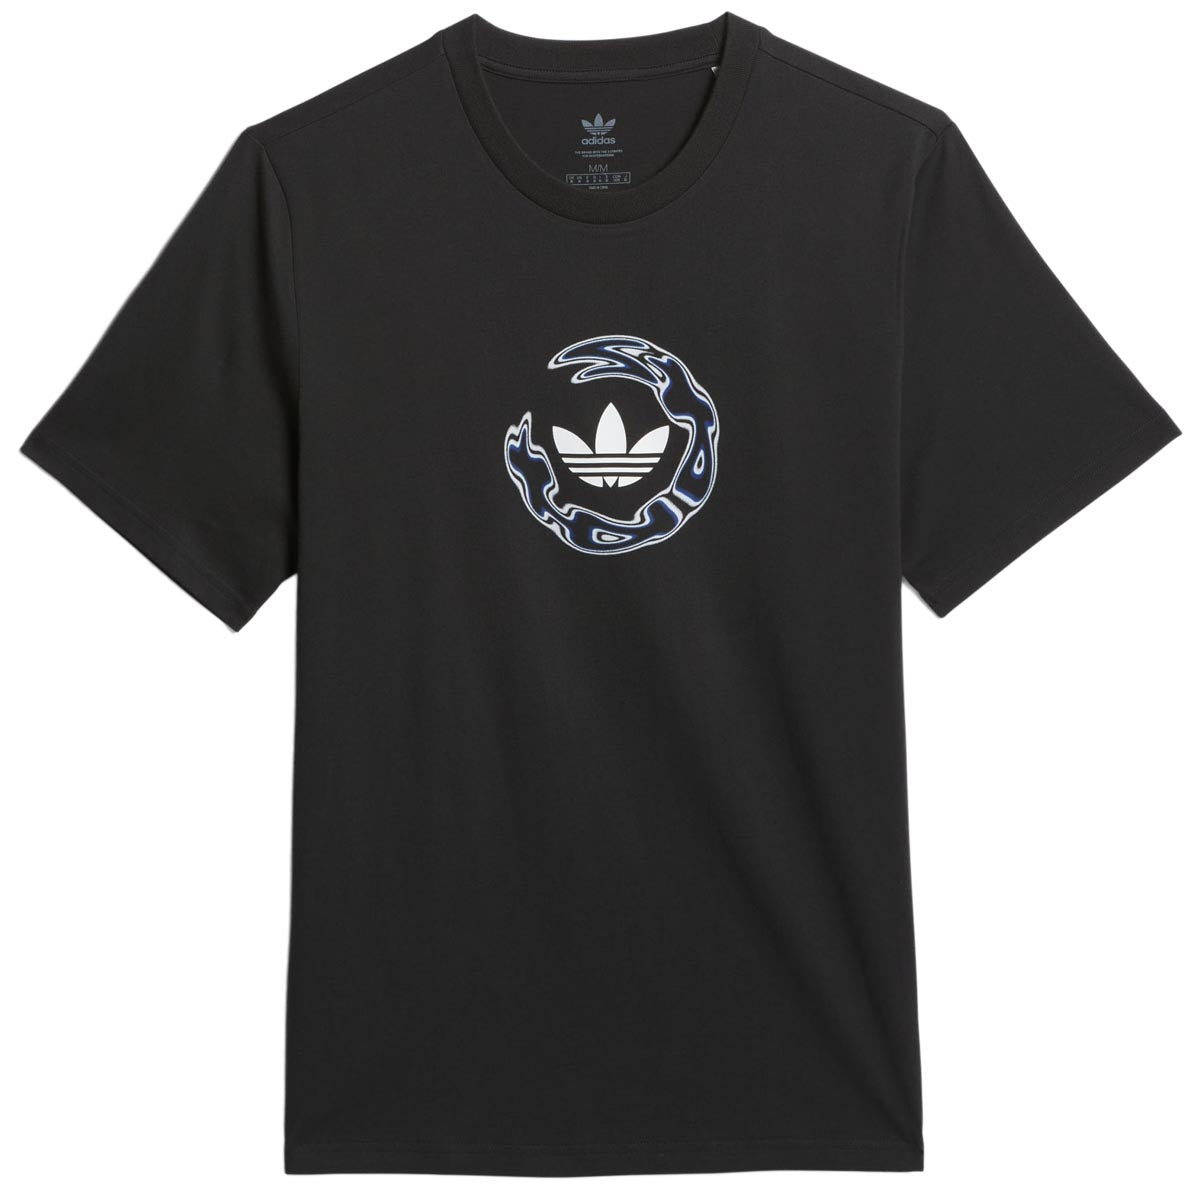 Adidas Skateboarding Wide Angle T-Shirt - Black/Royblu image 1